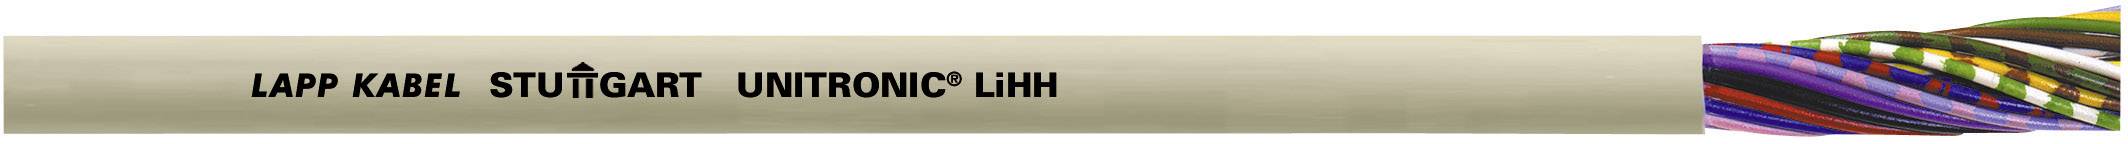 LAPP 37162-500 Datenleitung UNITRONIC LiHH 4 x 0.75 mm² Kieselgrau (RAL 7032) 500 m